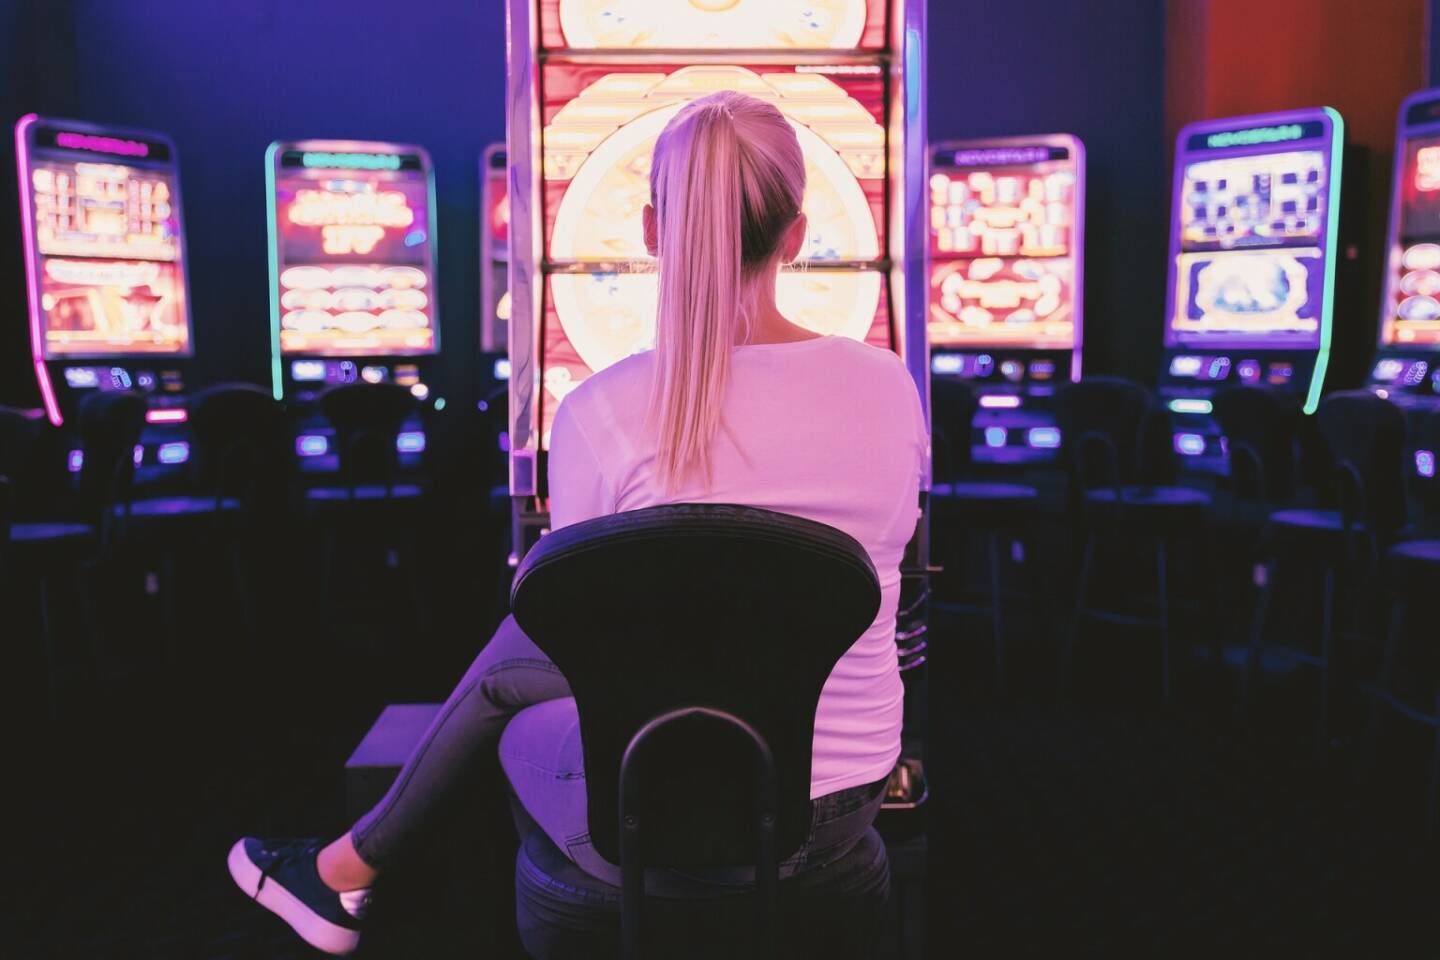 Casino, Slot Machine, Spielen - https://pixabay.com/de/photos/kasino-erwachsene-frau-jung-wette-3720812/